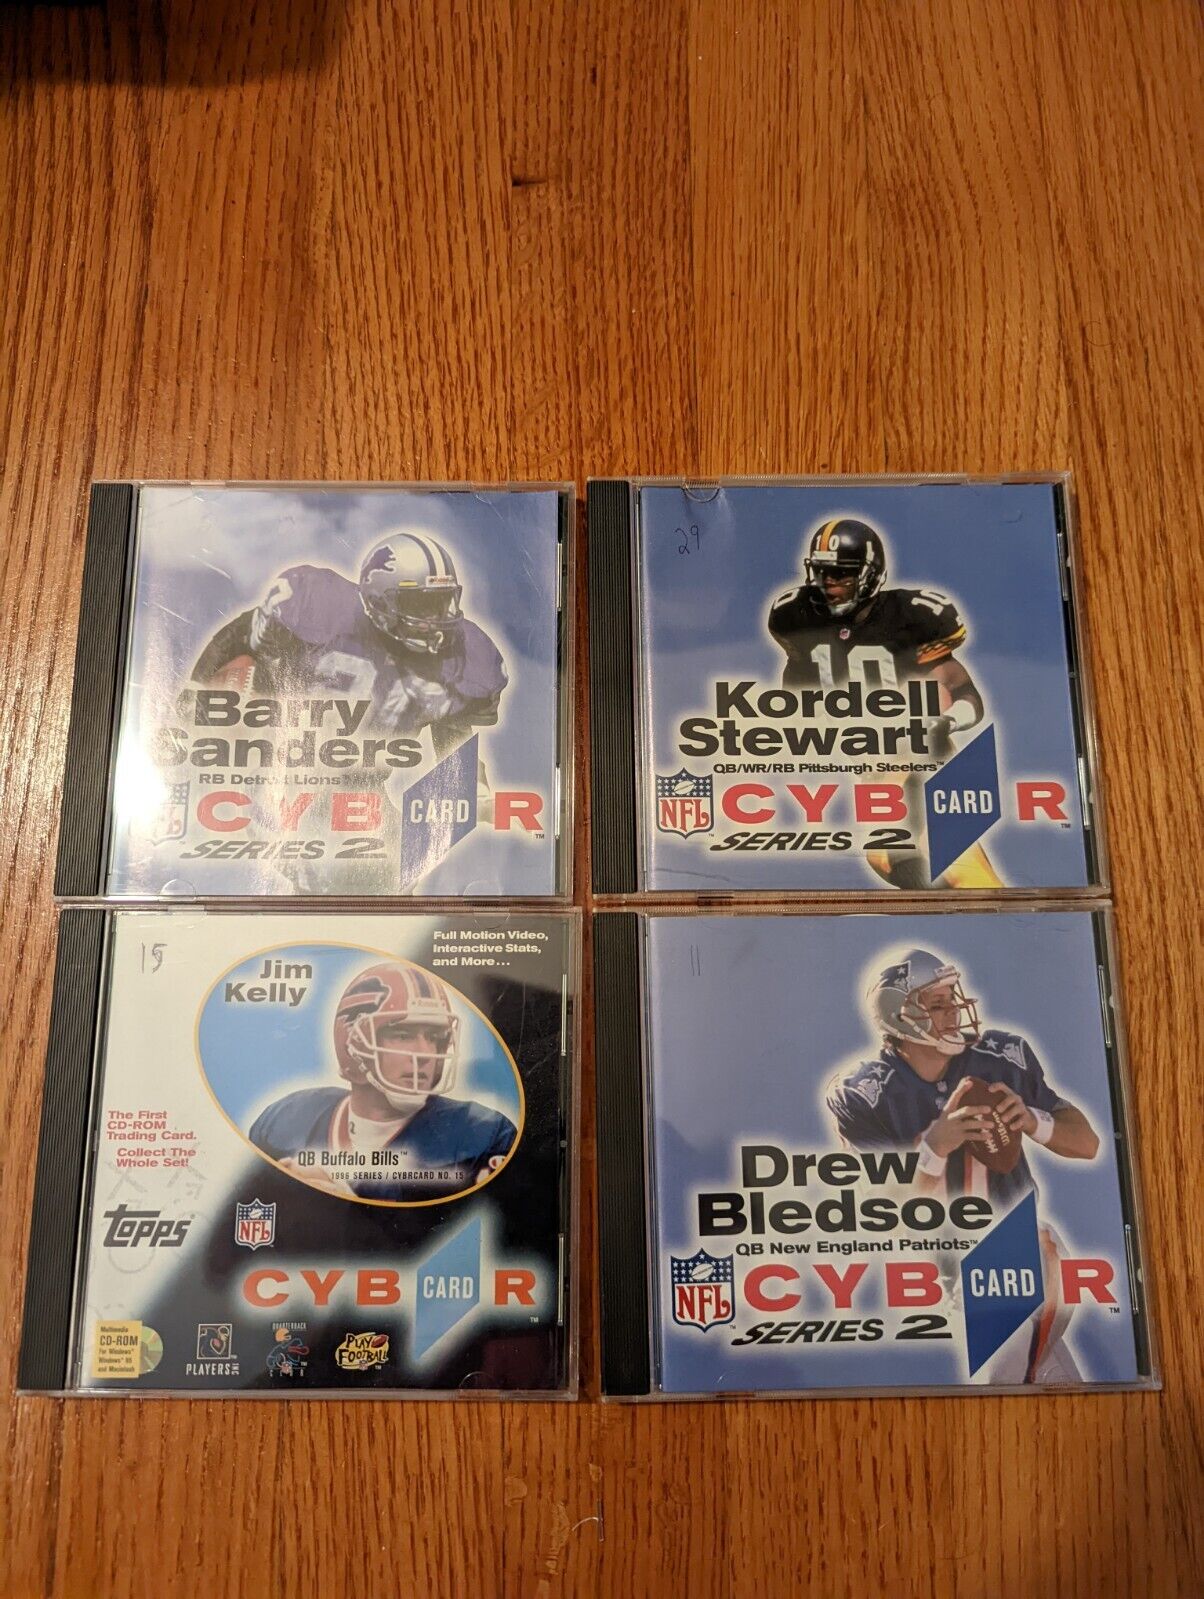 NFL Cyber Card PC CD Lot - Kordell, Bledsoe, Kelly, Barry Sanders  NFL Highlight